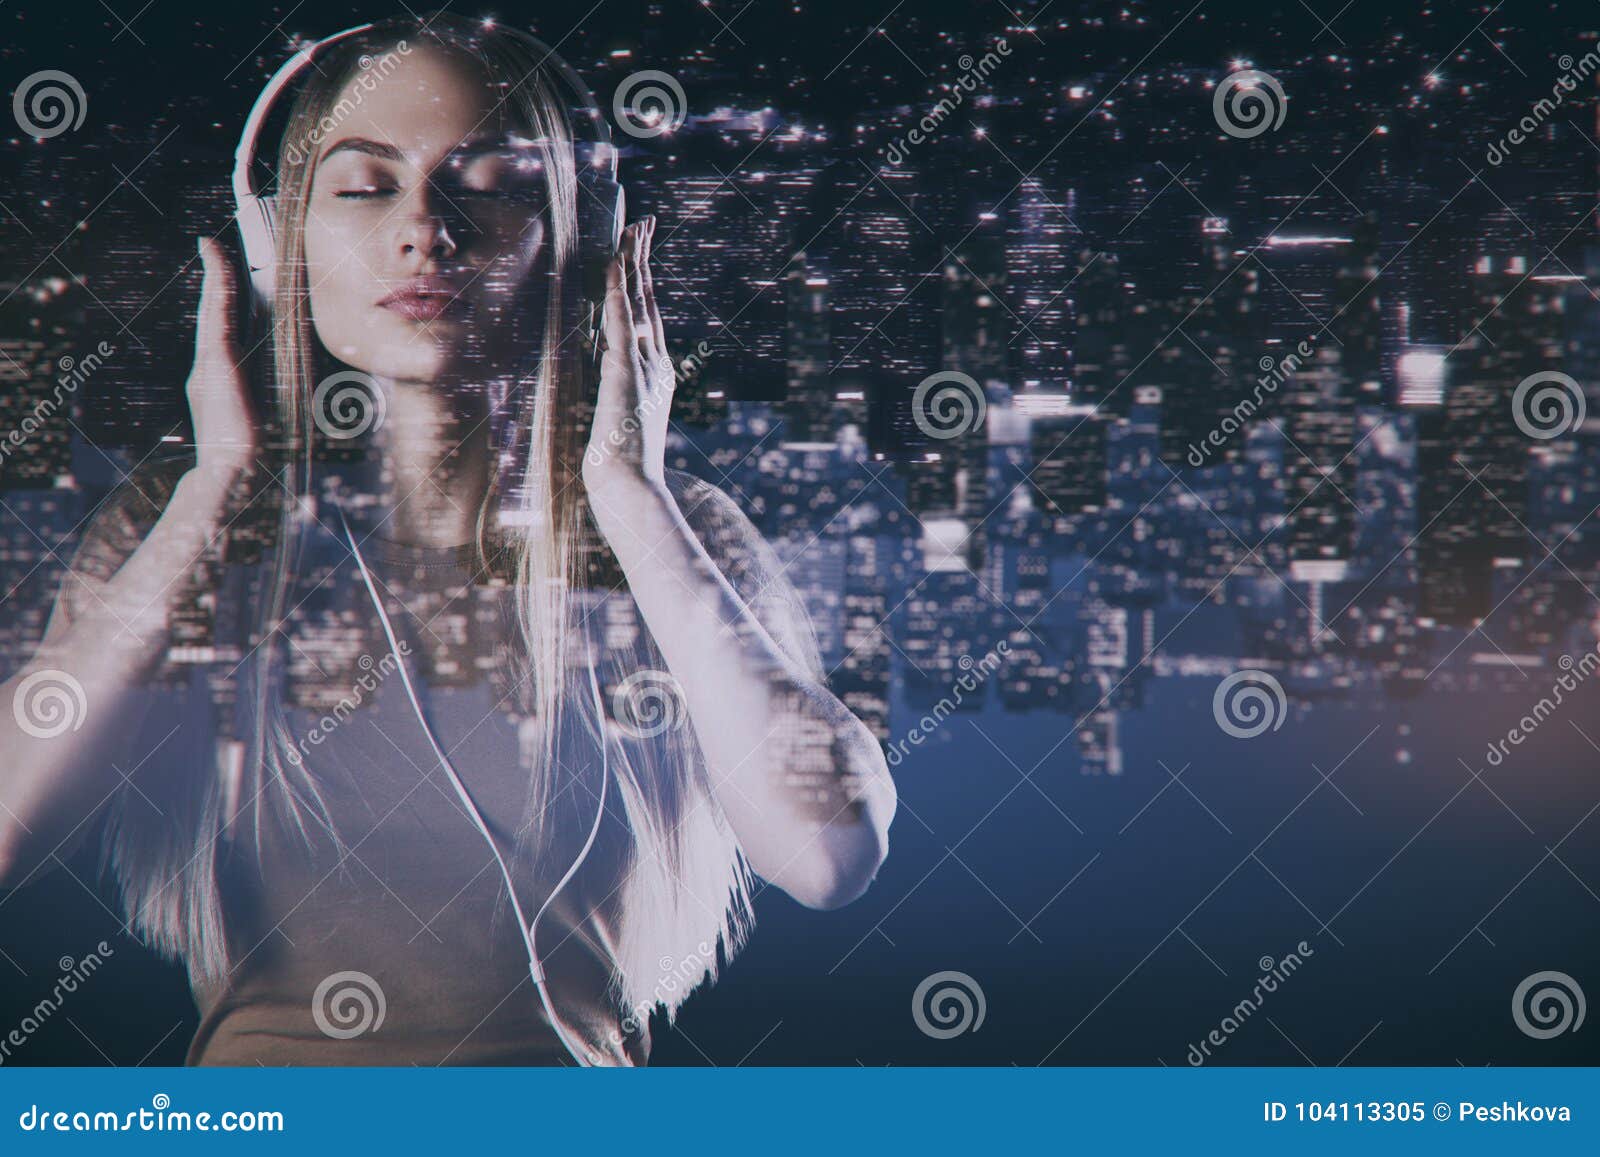 pretty woman listening to music